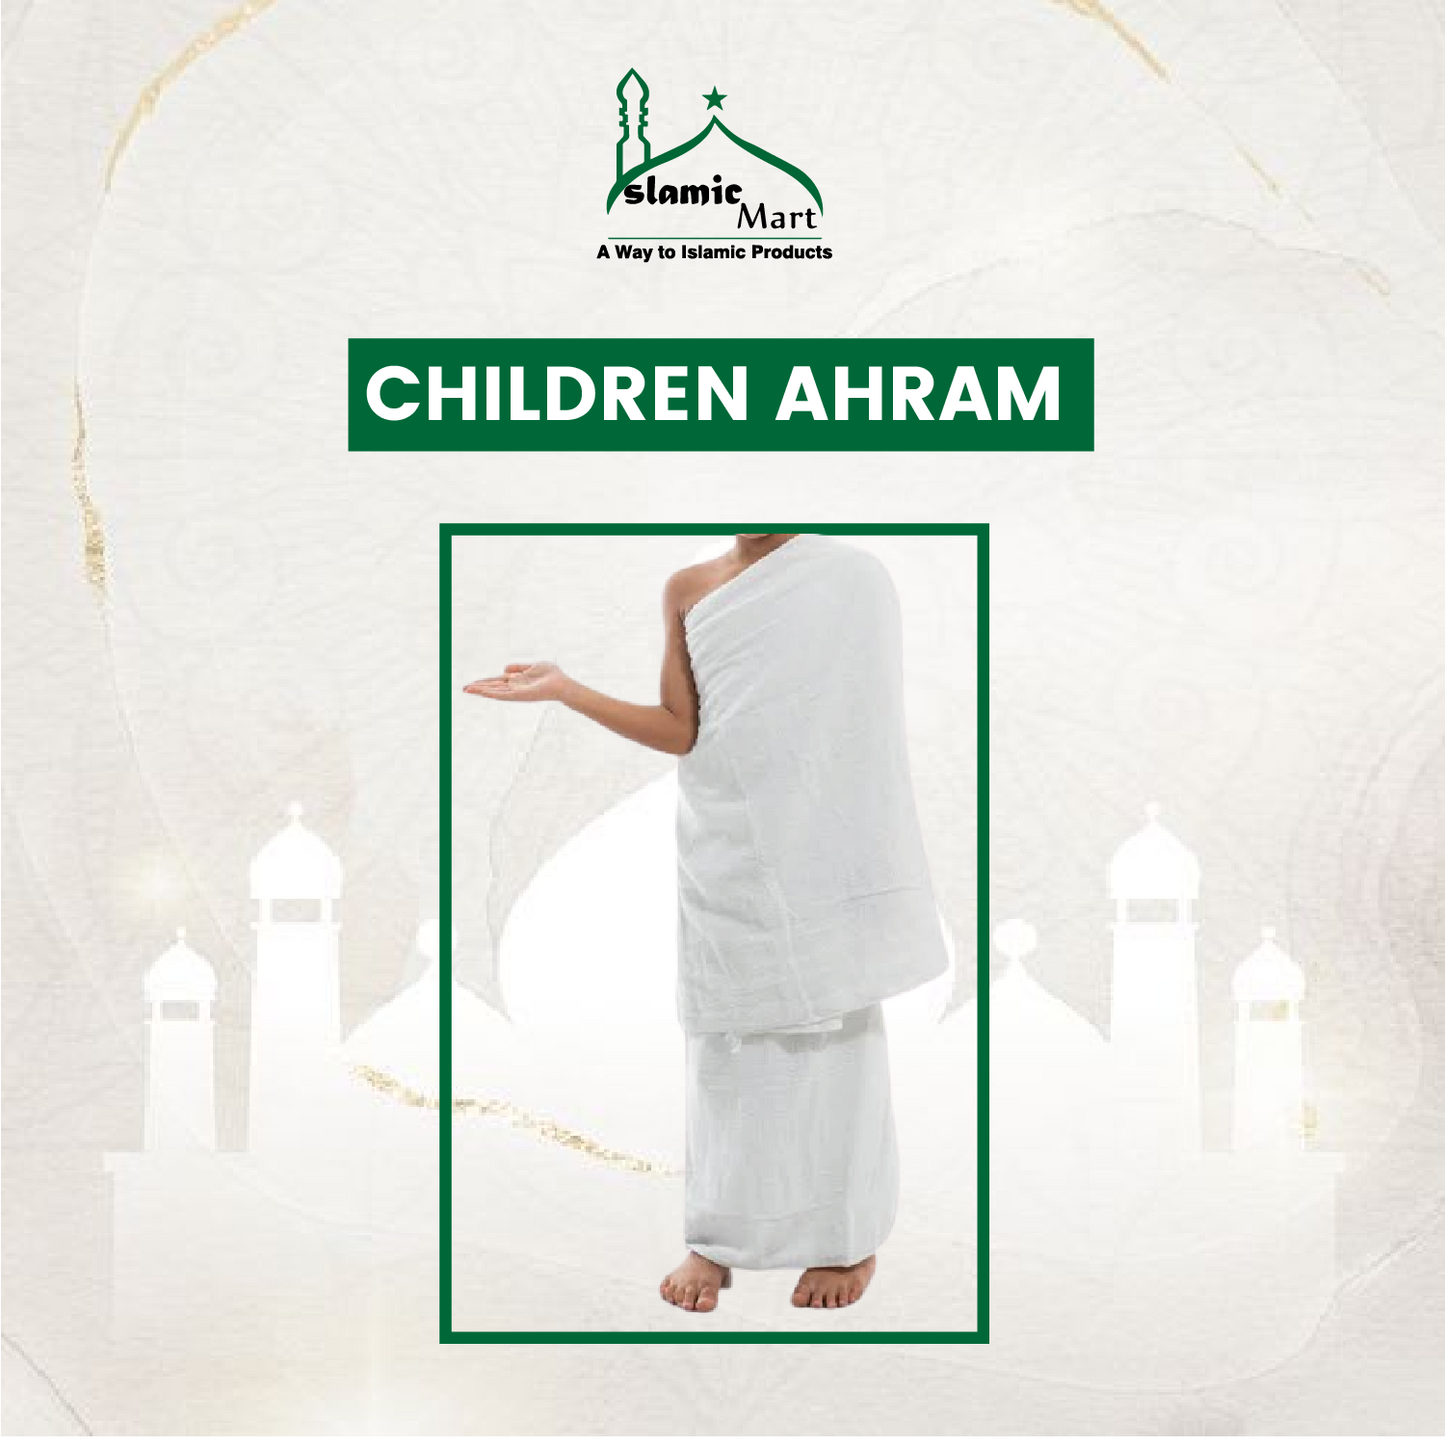 CHILDREN AHRAM